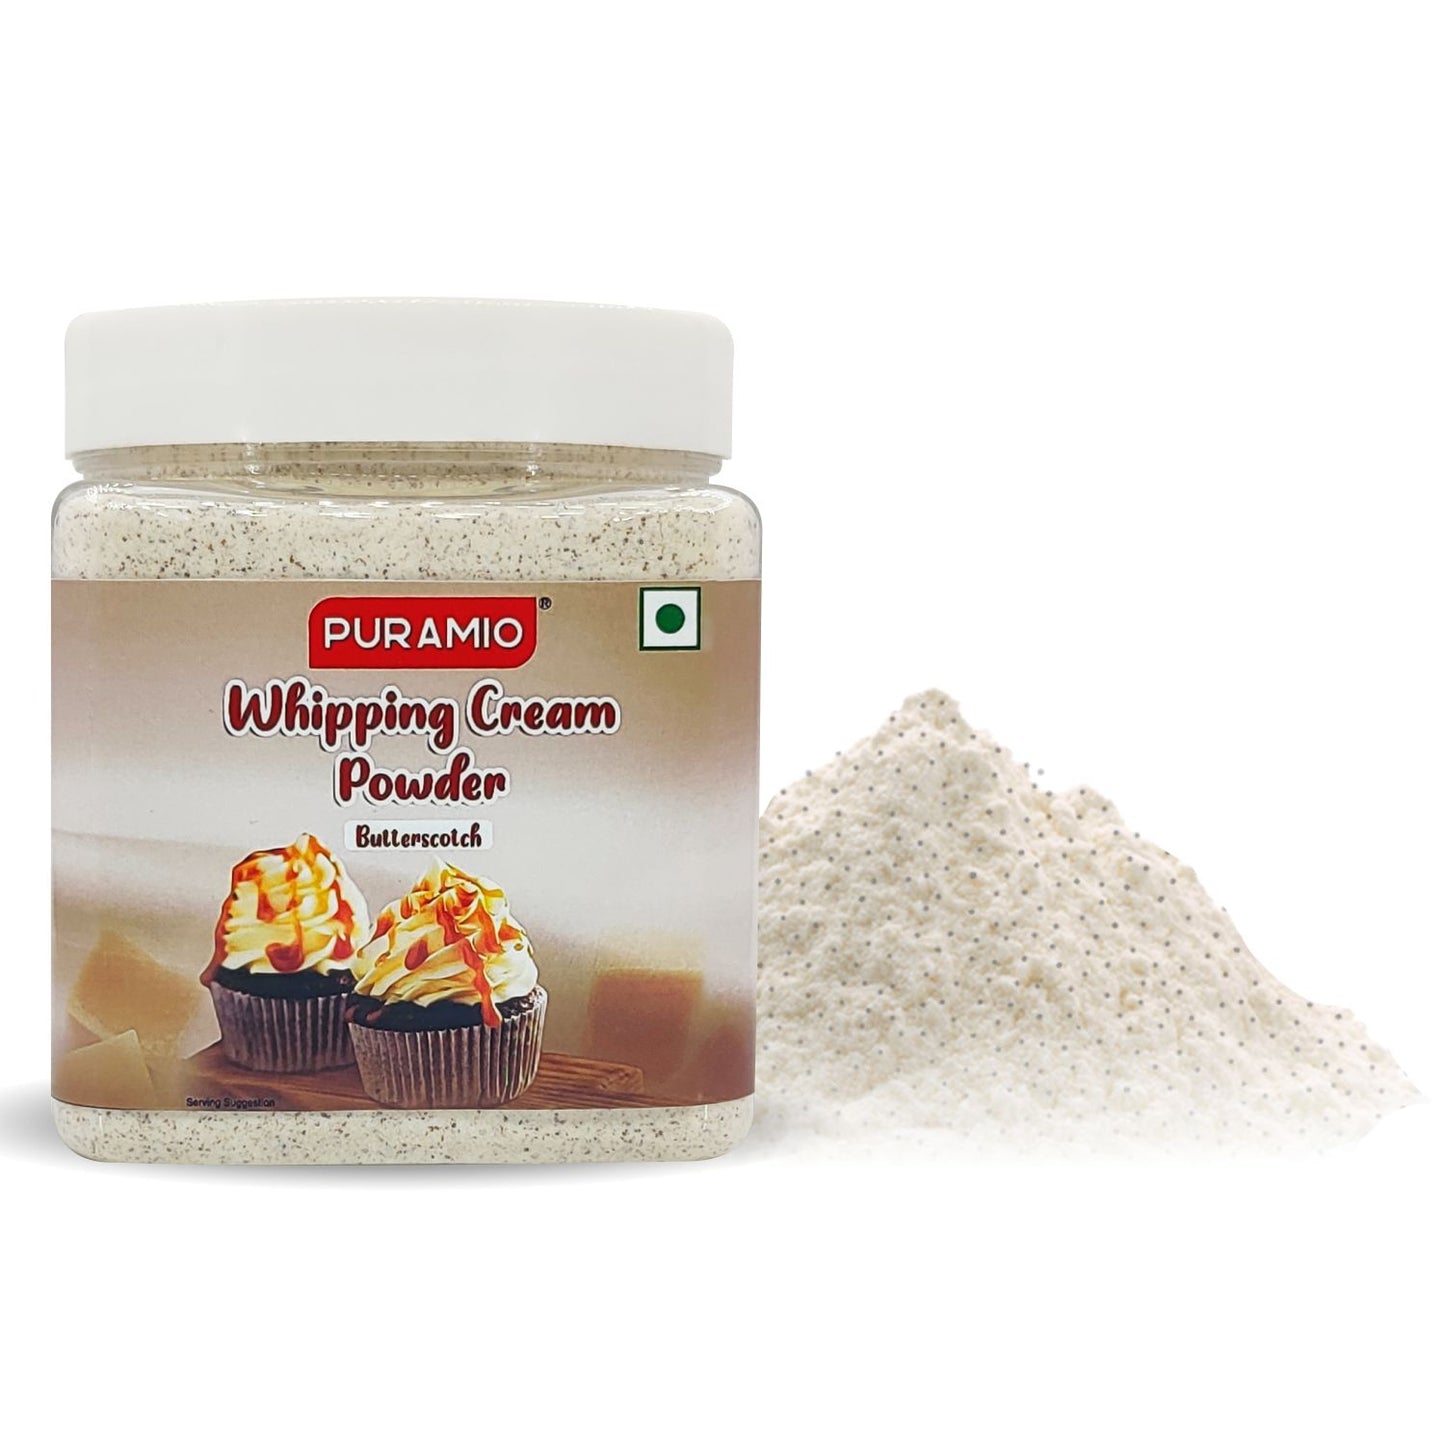 Puramio Whipping Cream Powder (Butterscotch)